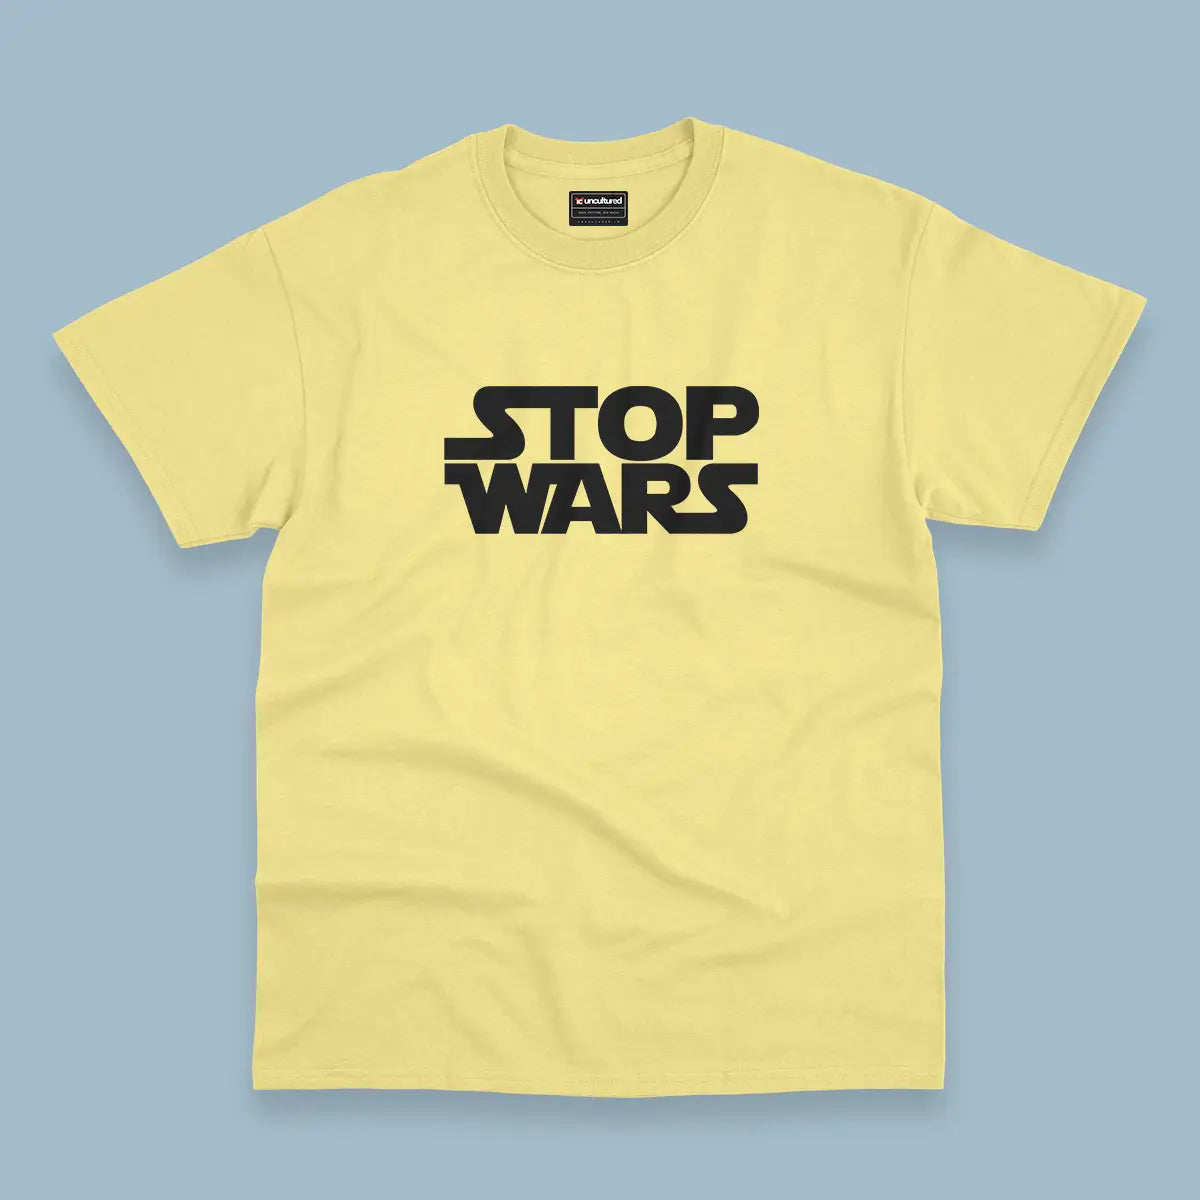 Stop wars - Oversized